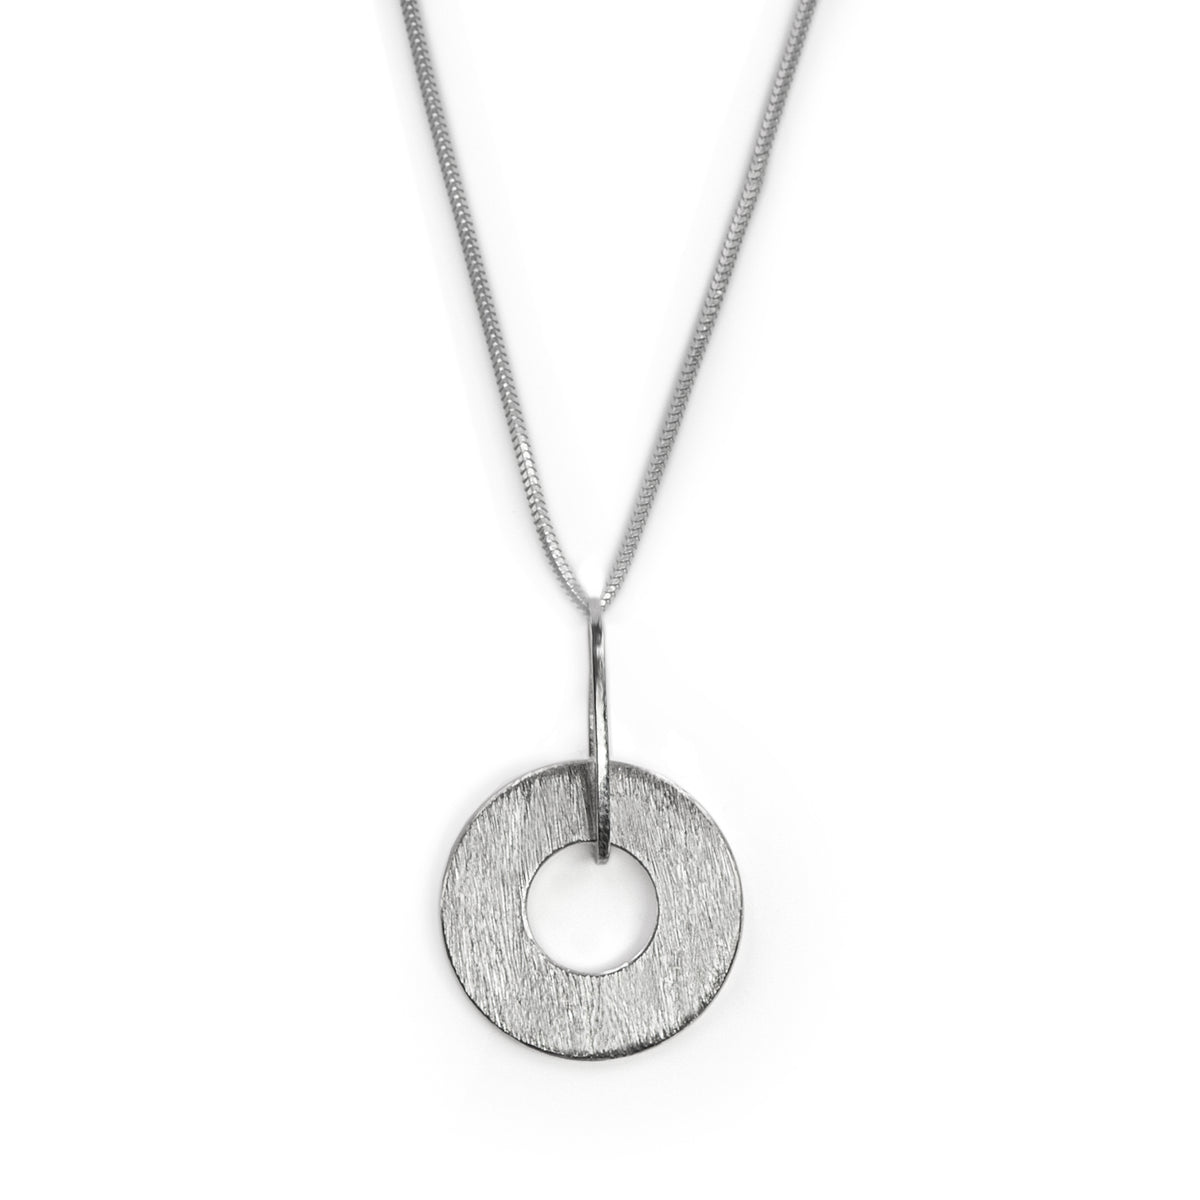 Sterling silver Origin necklace by Rouaida.